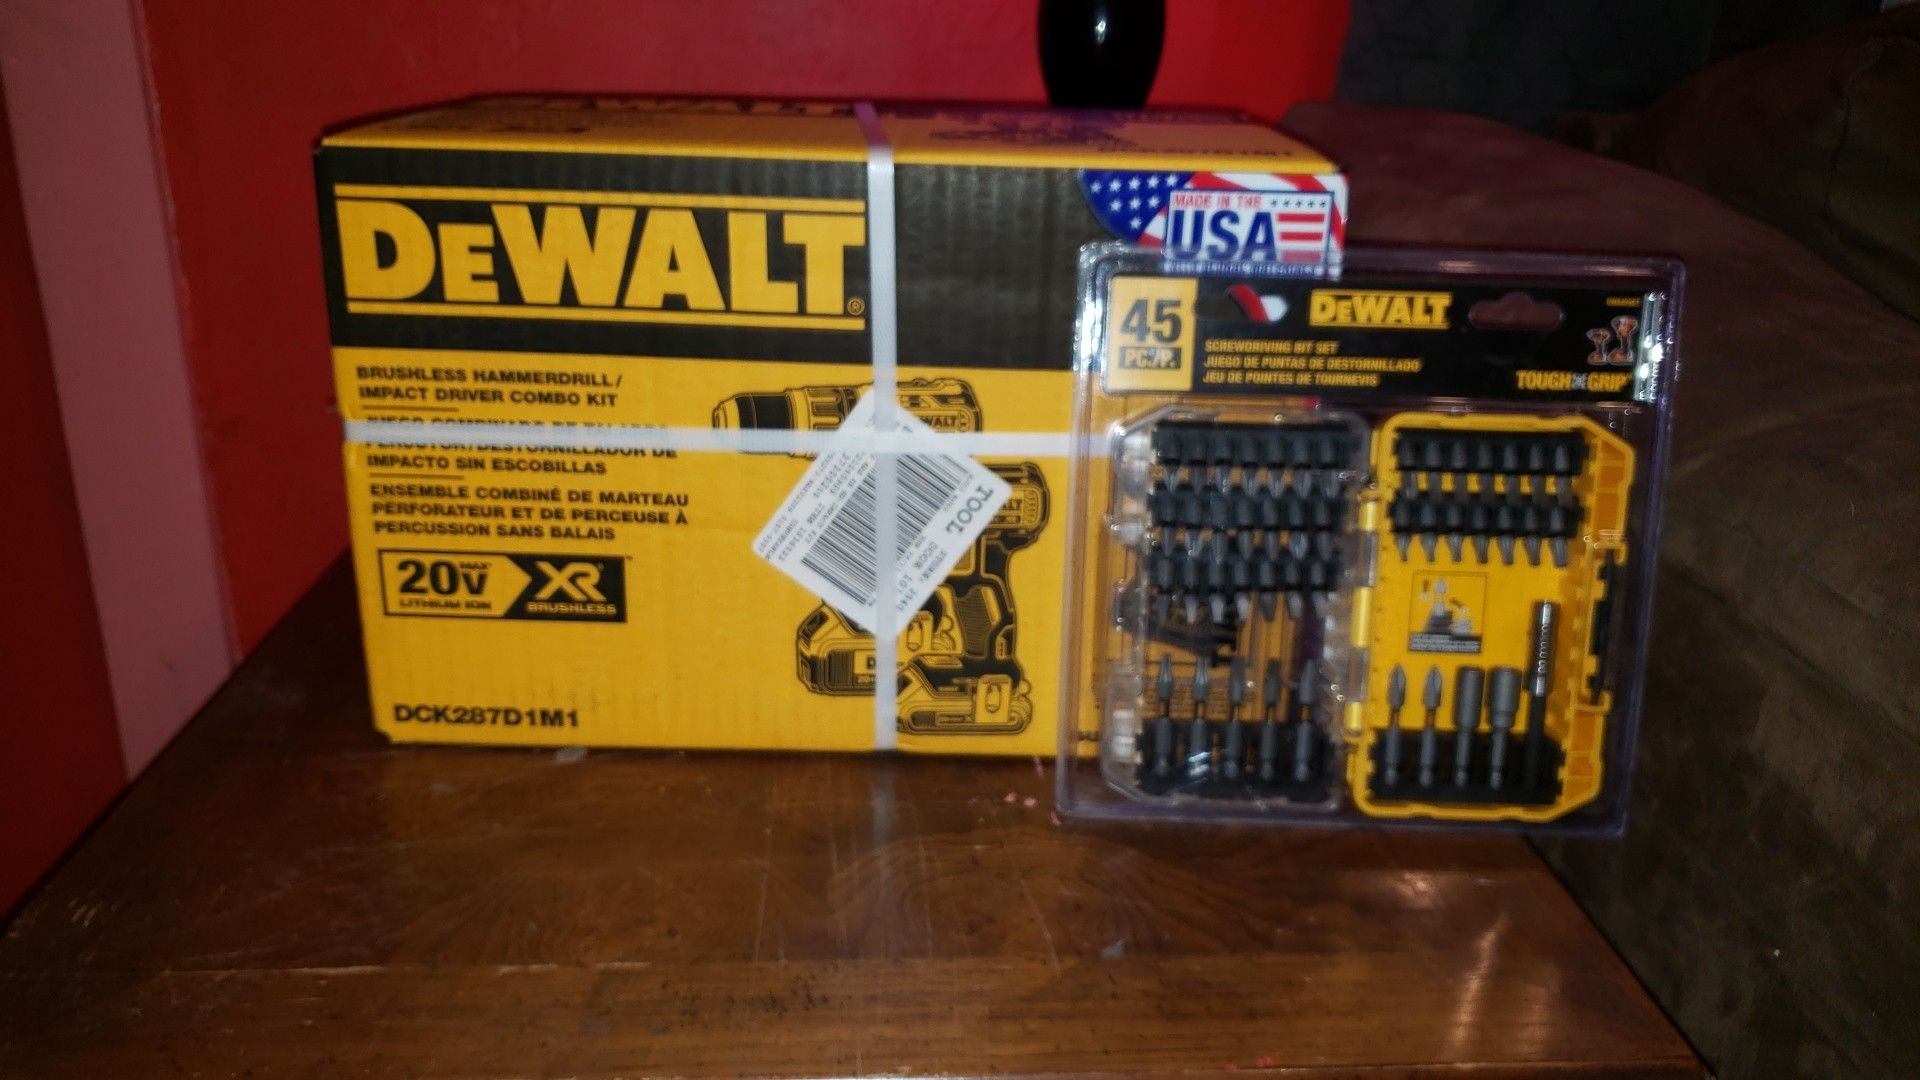 DEWalt power tools